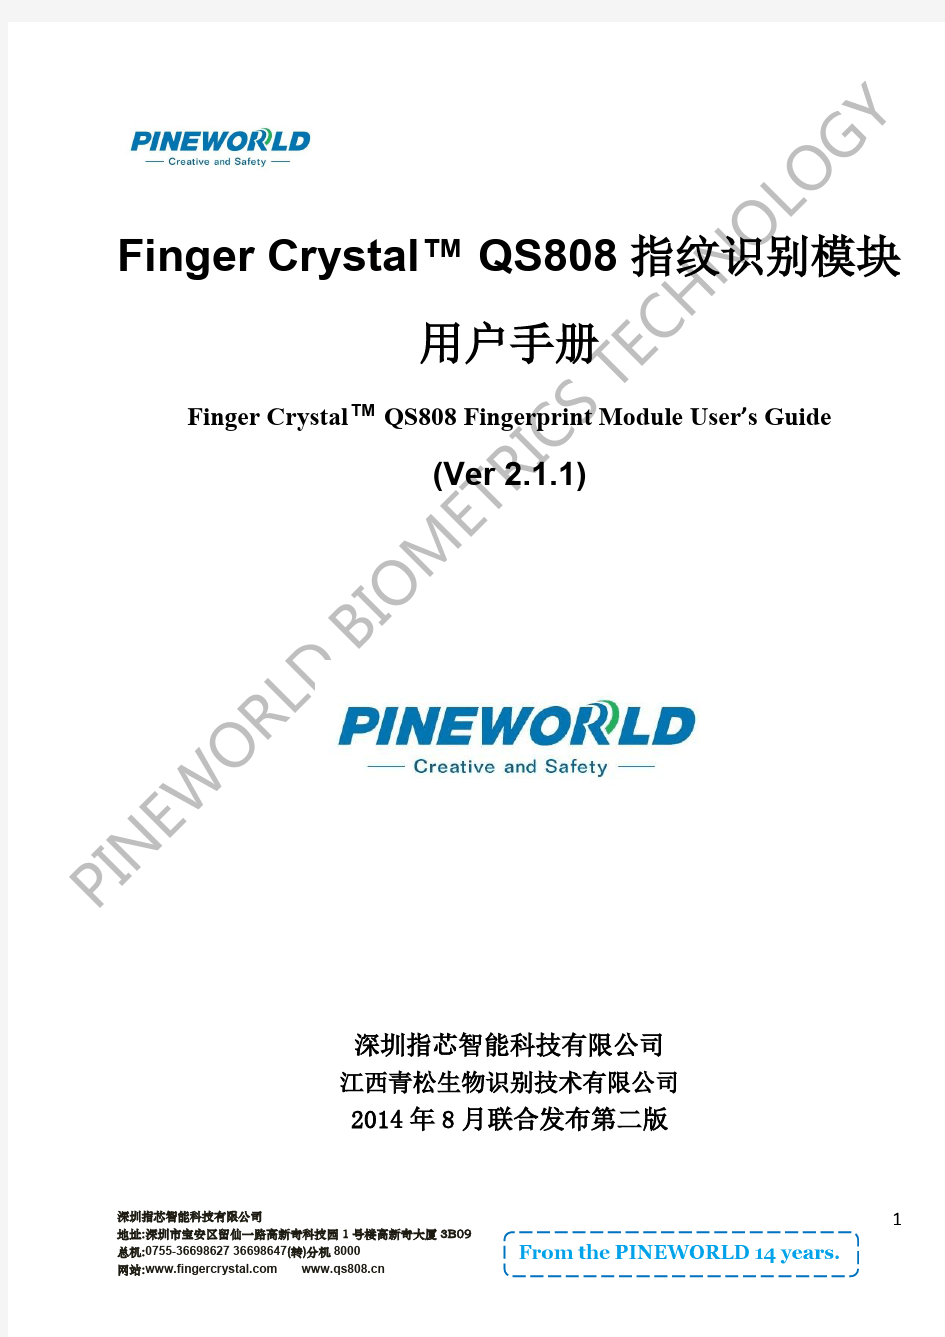 FINGER CRYSTAL QS808指纹芯片模块用户使用手册(20140821)